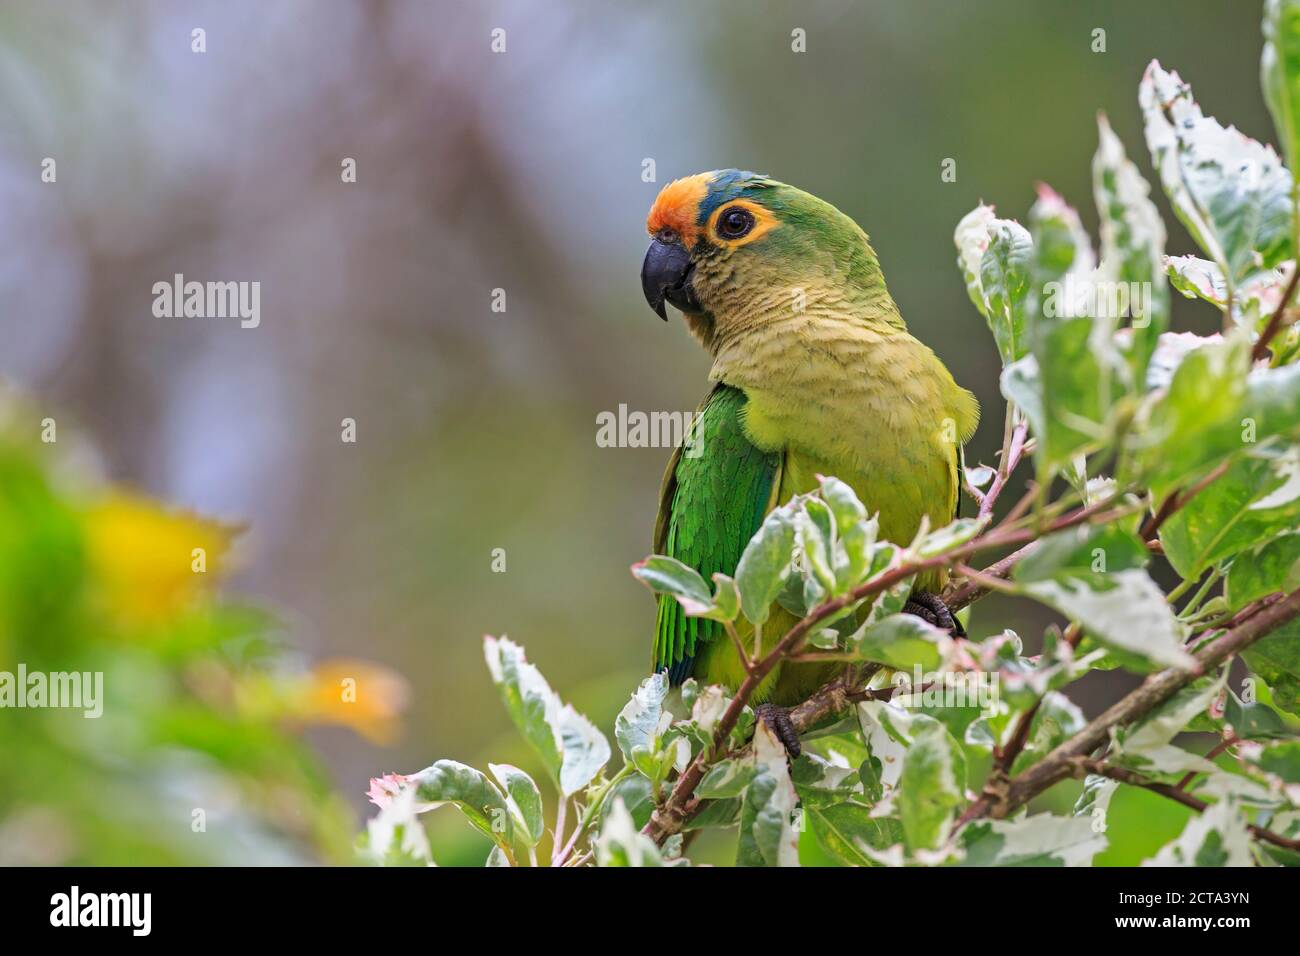 South America, Brasilia, Mato Grosso do Sul, Pantanal, Peach-fronted Parakeets, Aratinga aurea Stock Photo